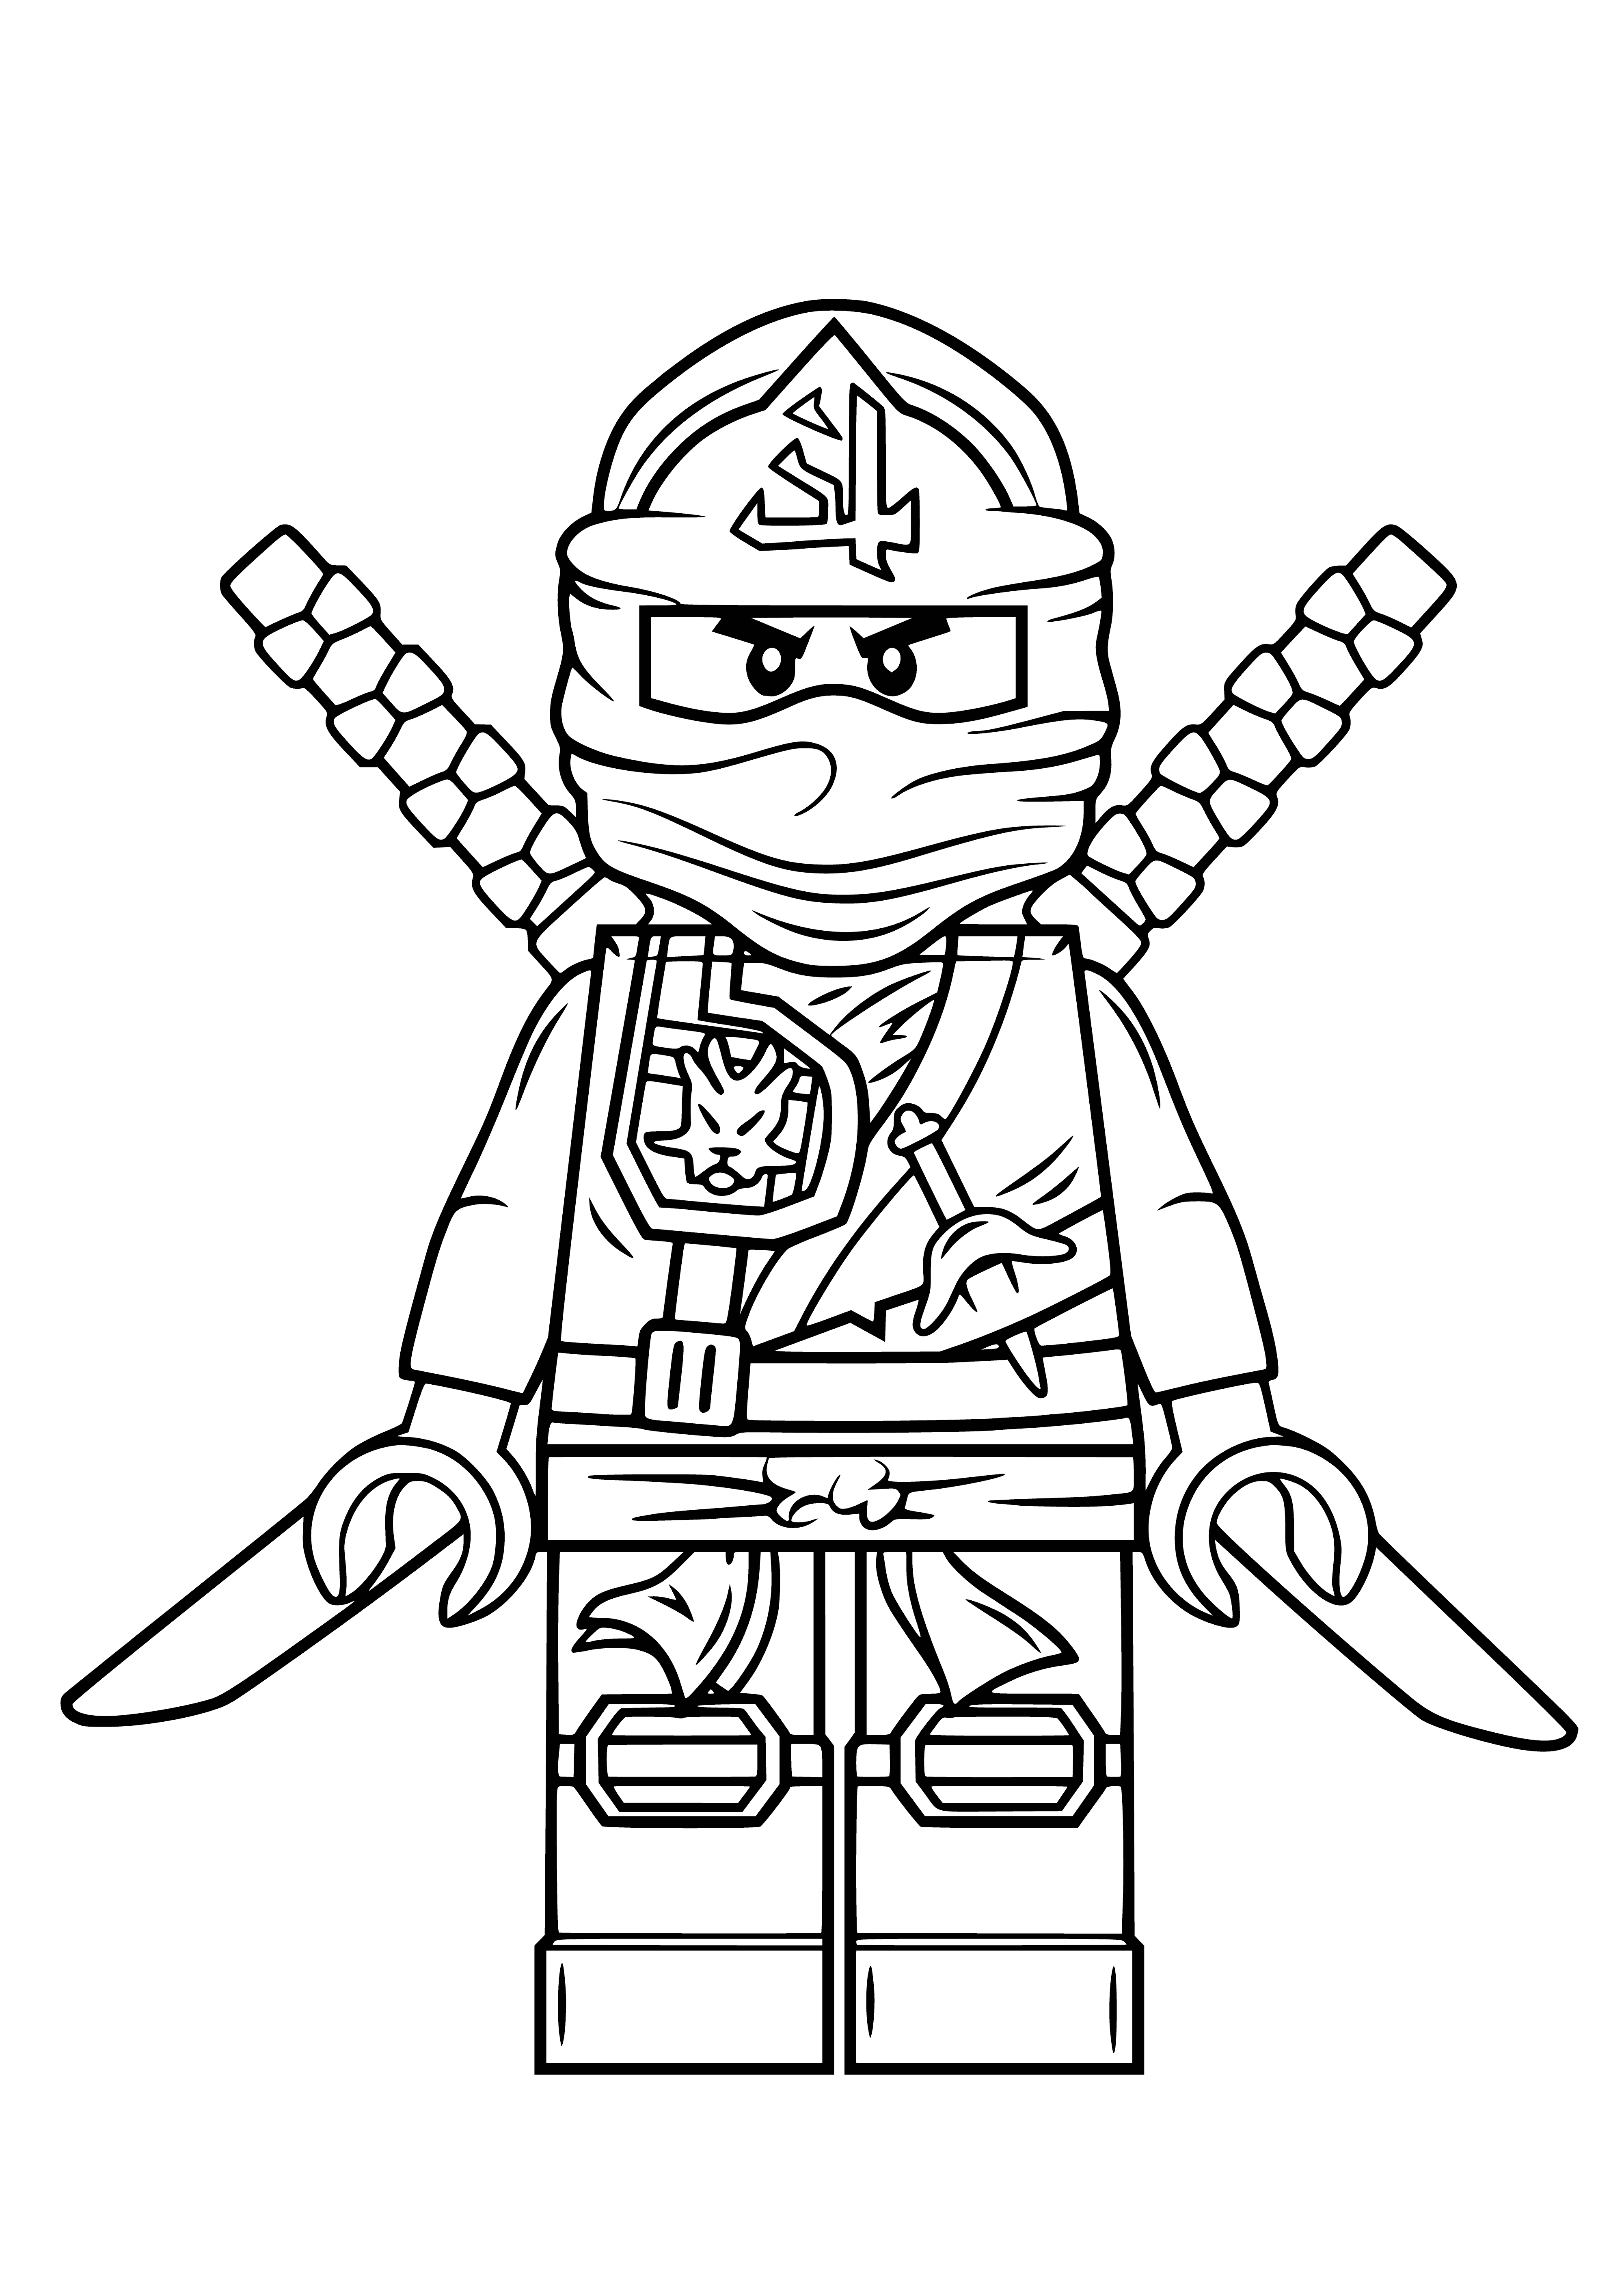 coloring page: Green ninja has green face mask, hood, shirt, pants, belt w/snake & swords. #LEGONinjago